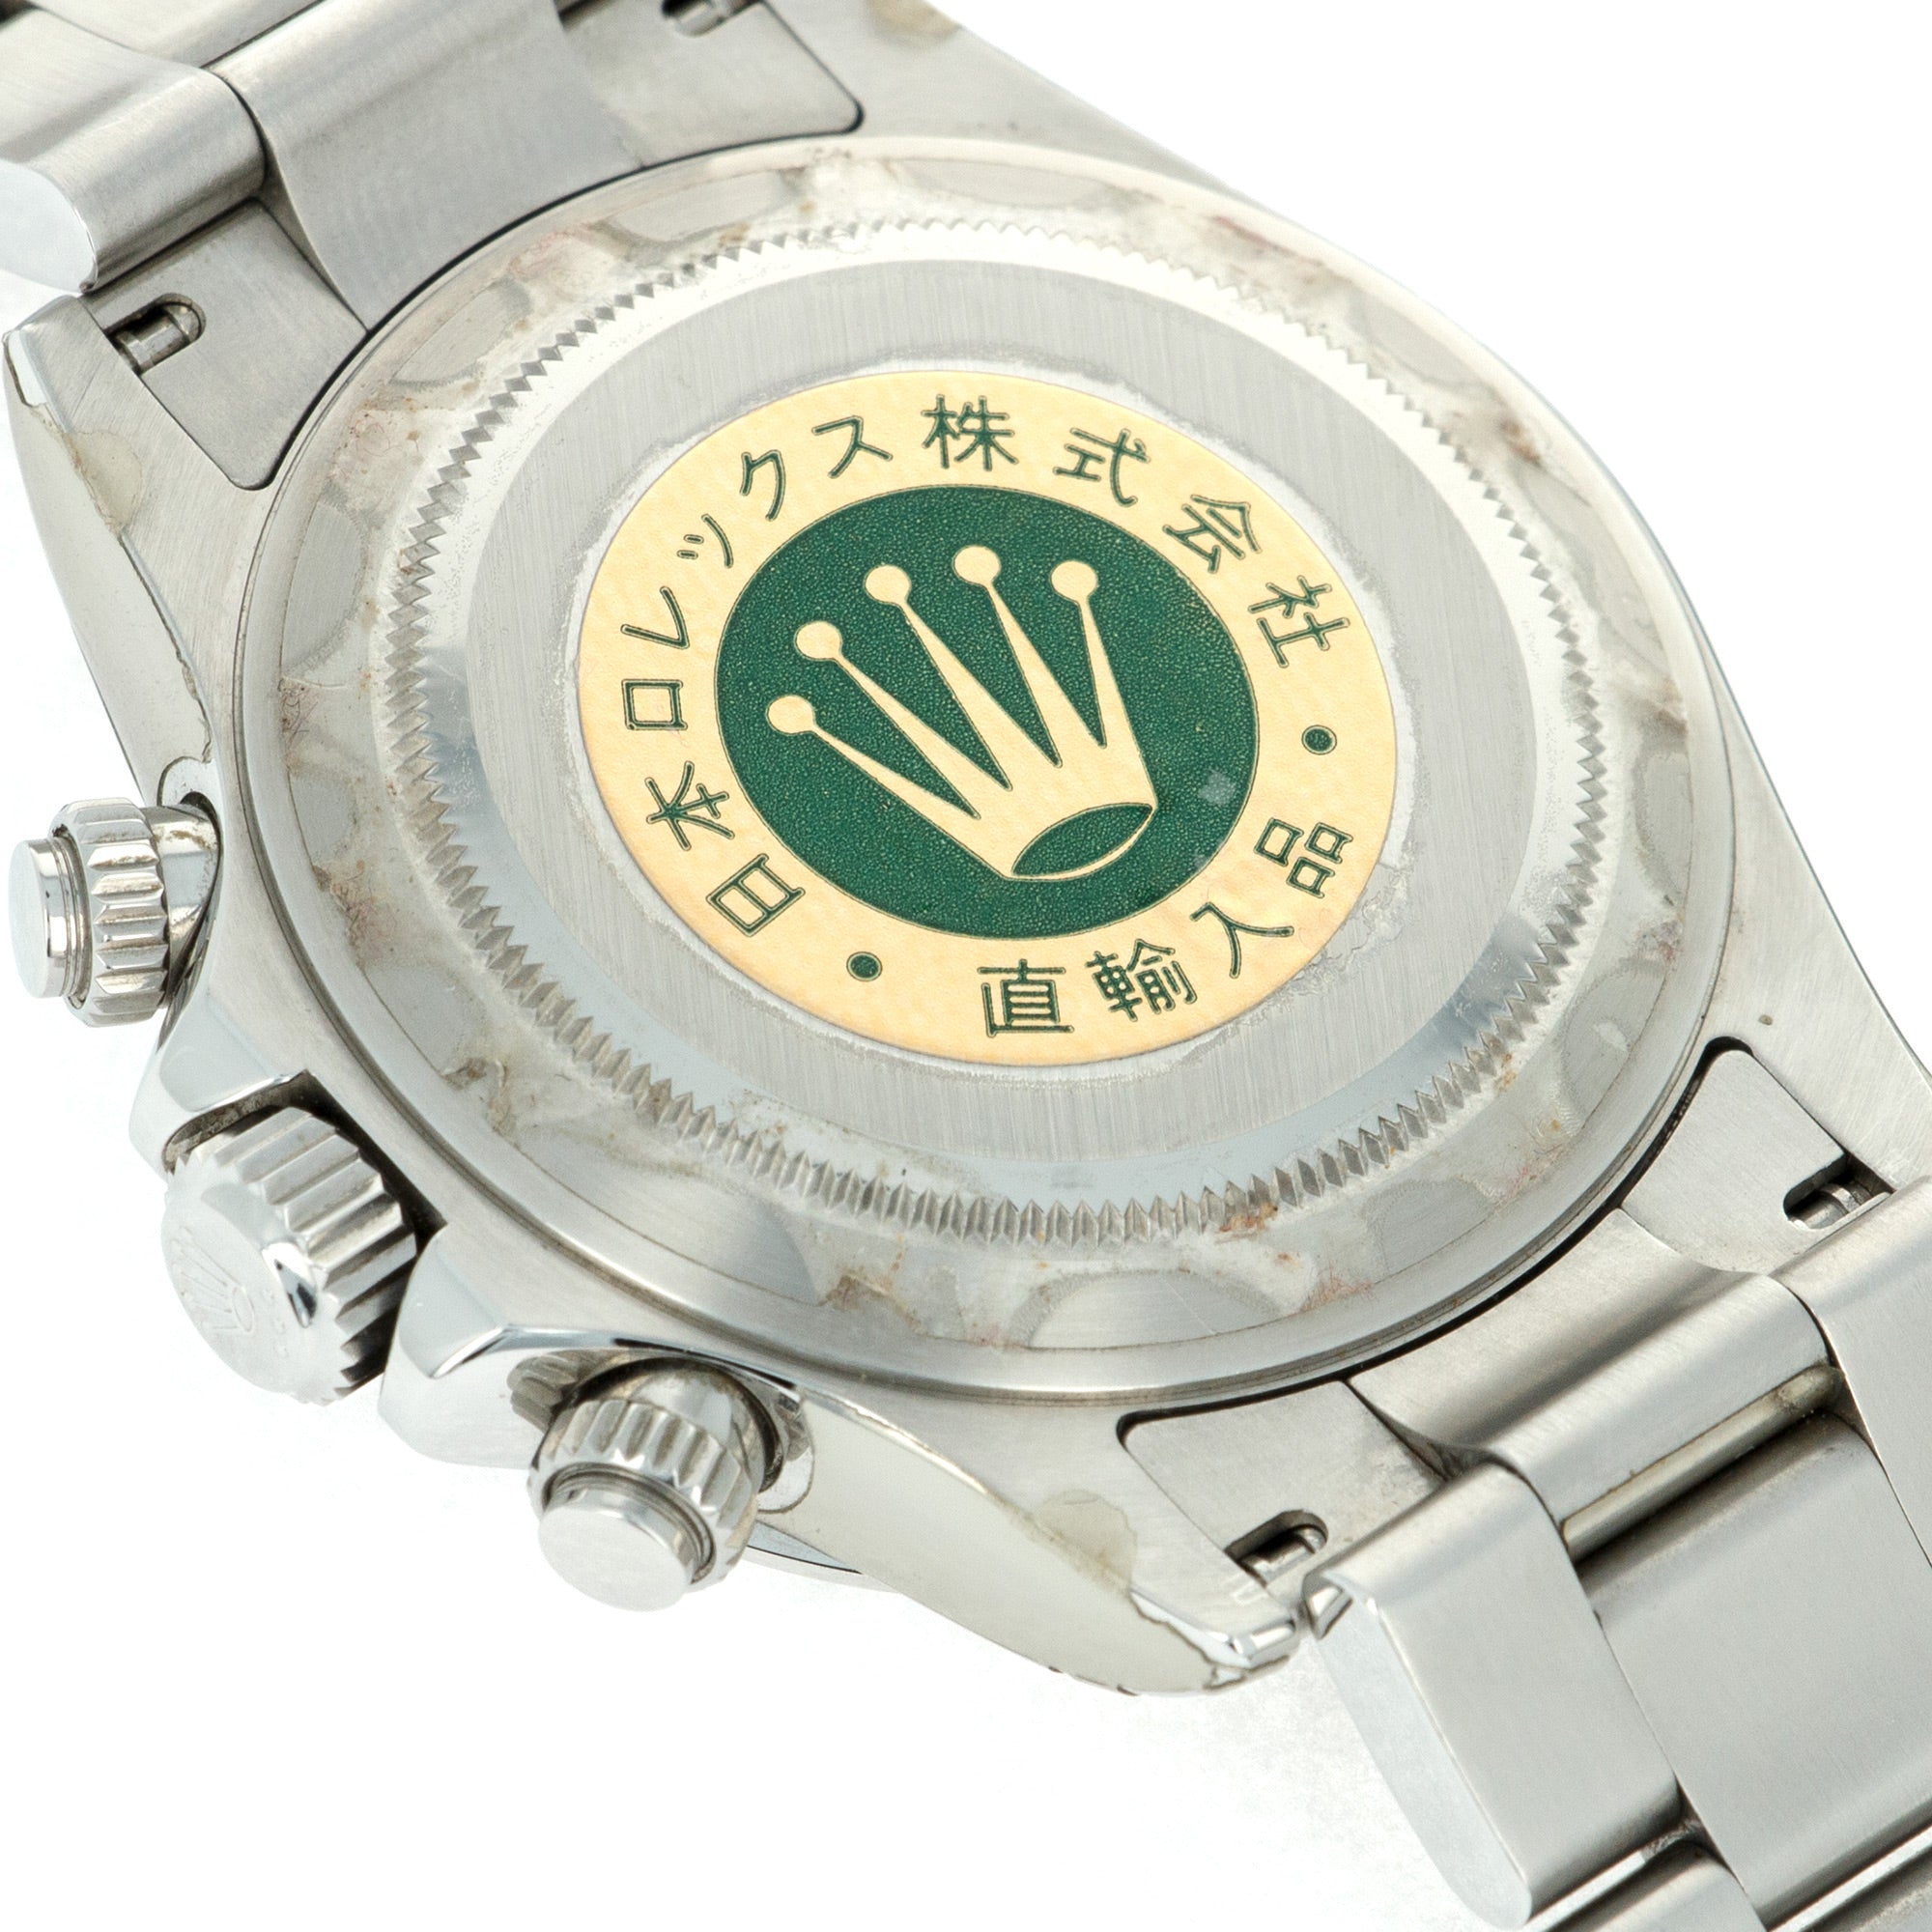 Rolex - Rolex Daytona Steel Ref. 116520 in New Old Stock Condition - The Keystone Watches